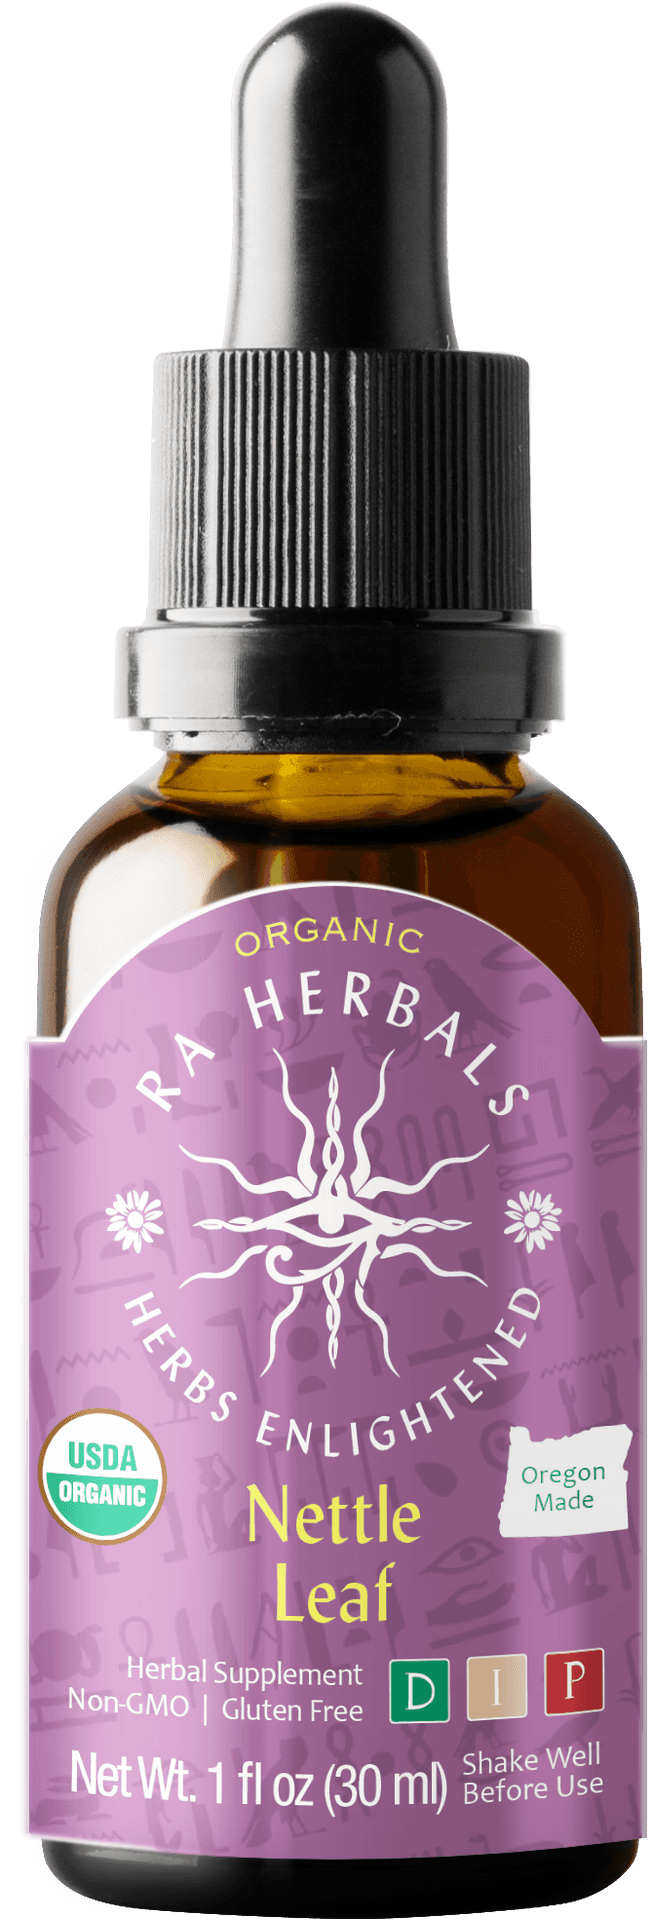 Organic Nettle Leaf Herbal Supplement Dropper Bottle PNG